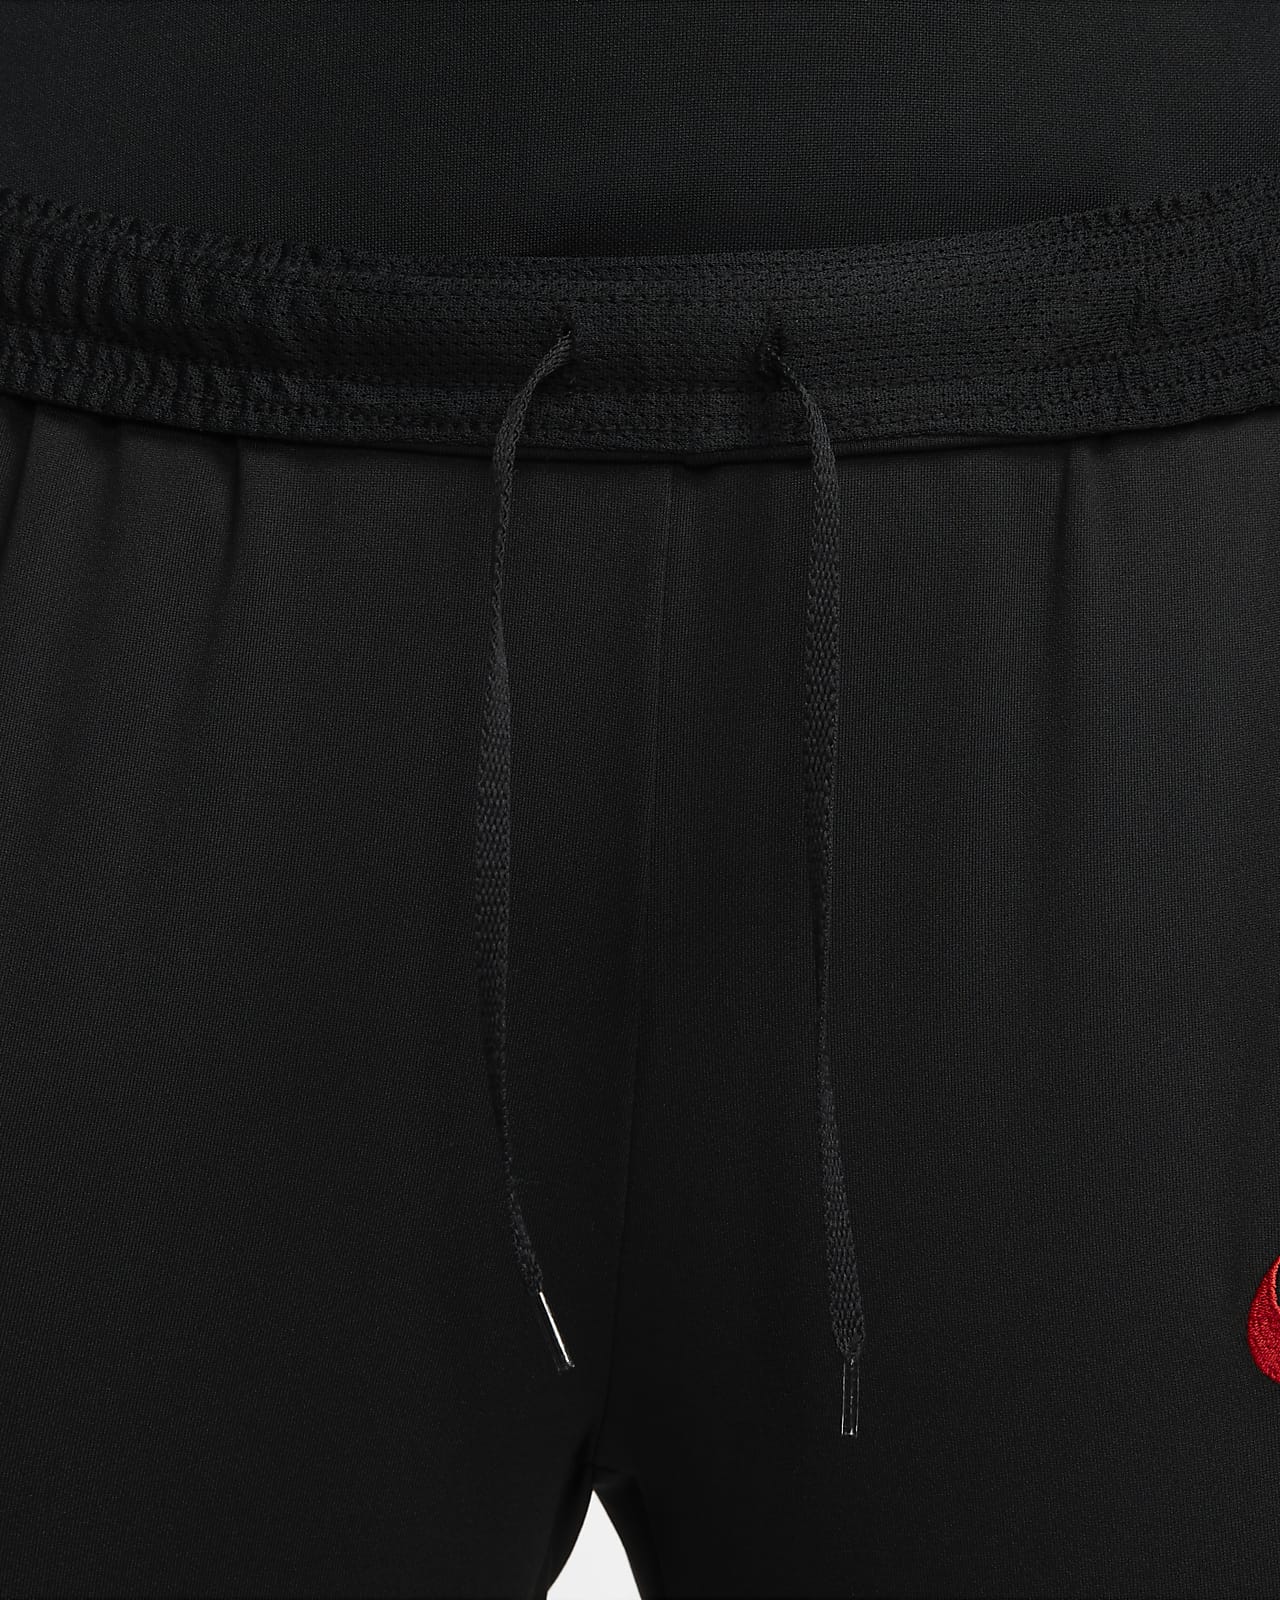 U.S. Strike Men's Nike Dri-FIT Knit Soccer Pants.